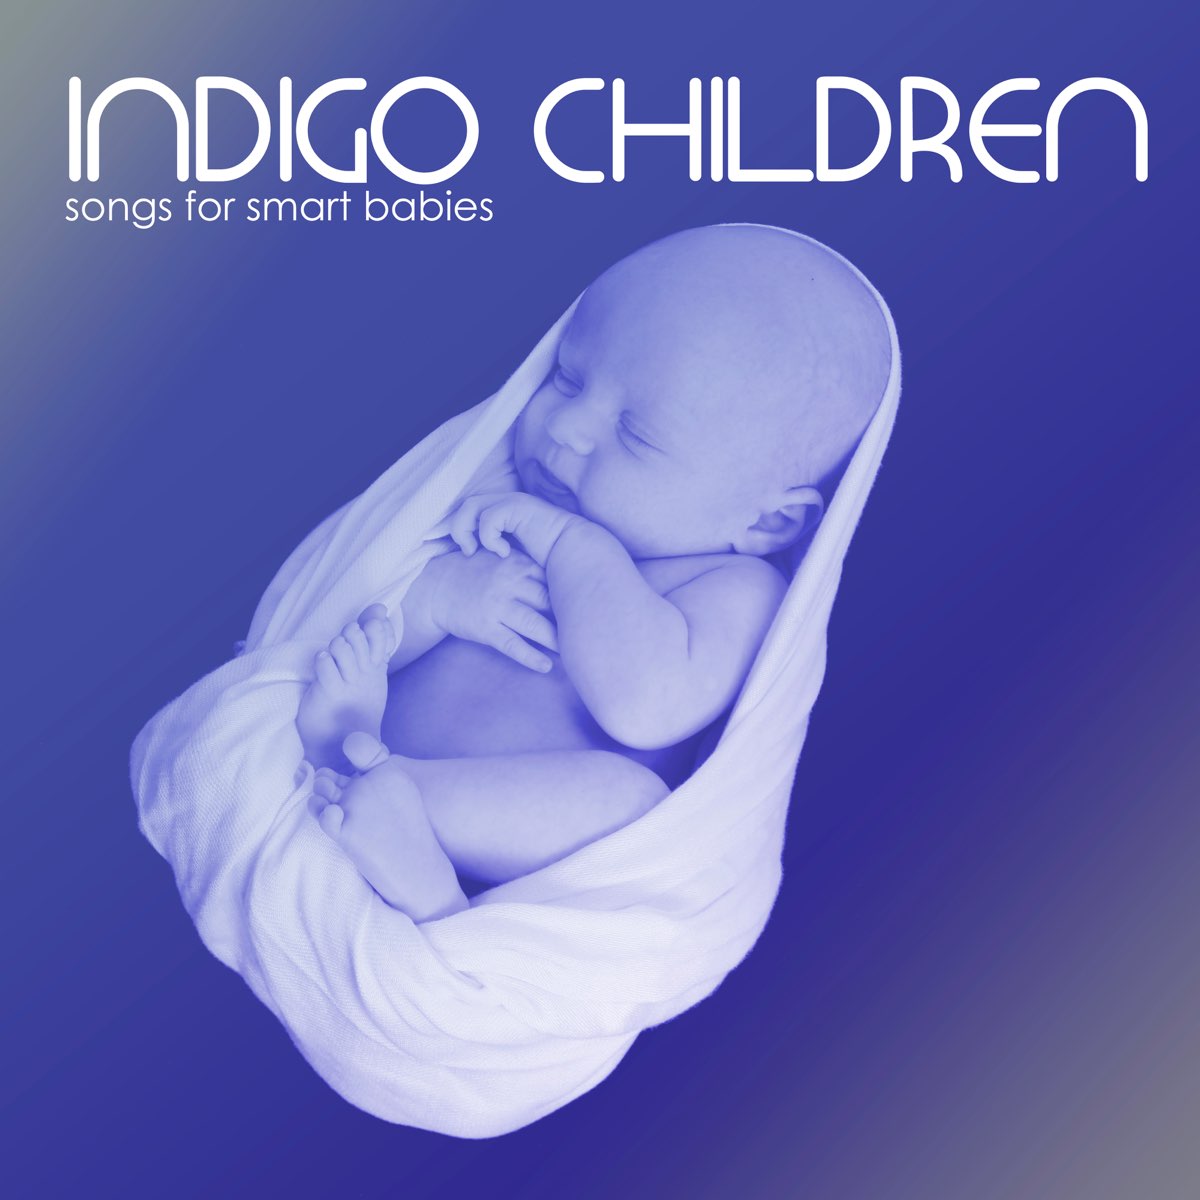 Indigo Children Music - New Age Songs for Smart Babies and Awakening  Special Kids - Album by Children Music Academy - Apple Music